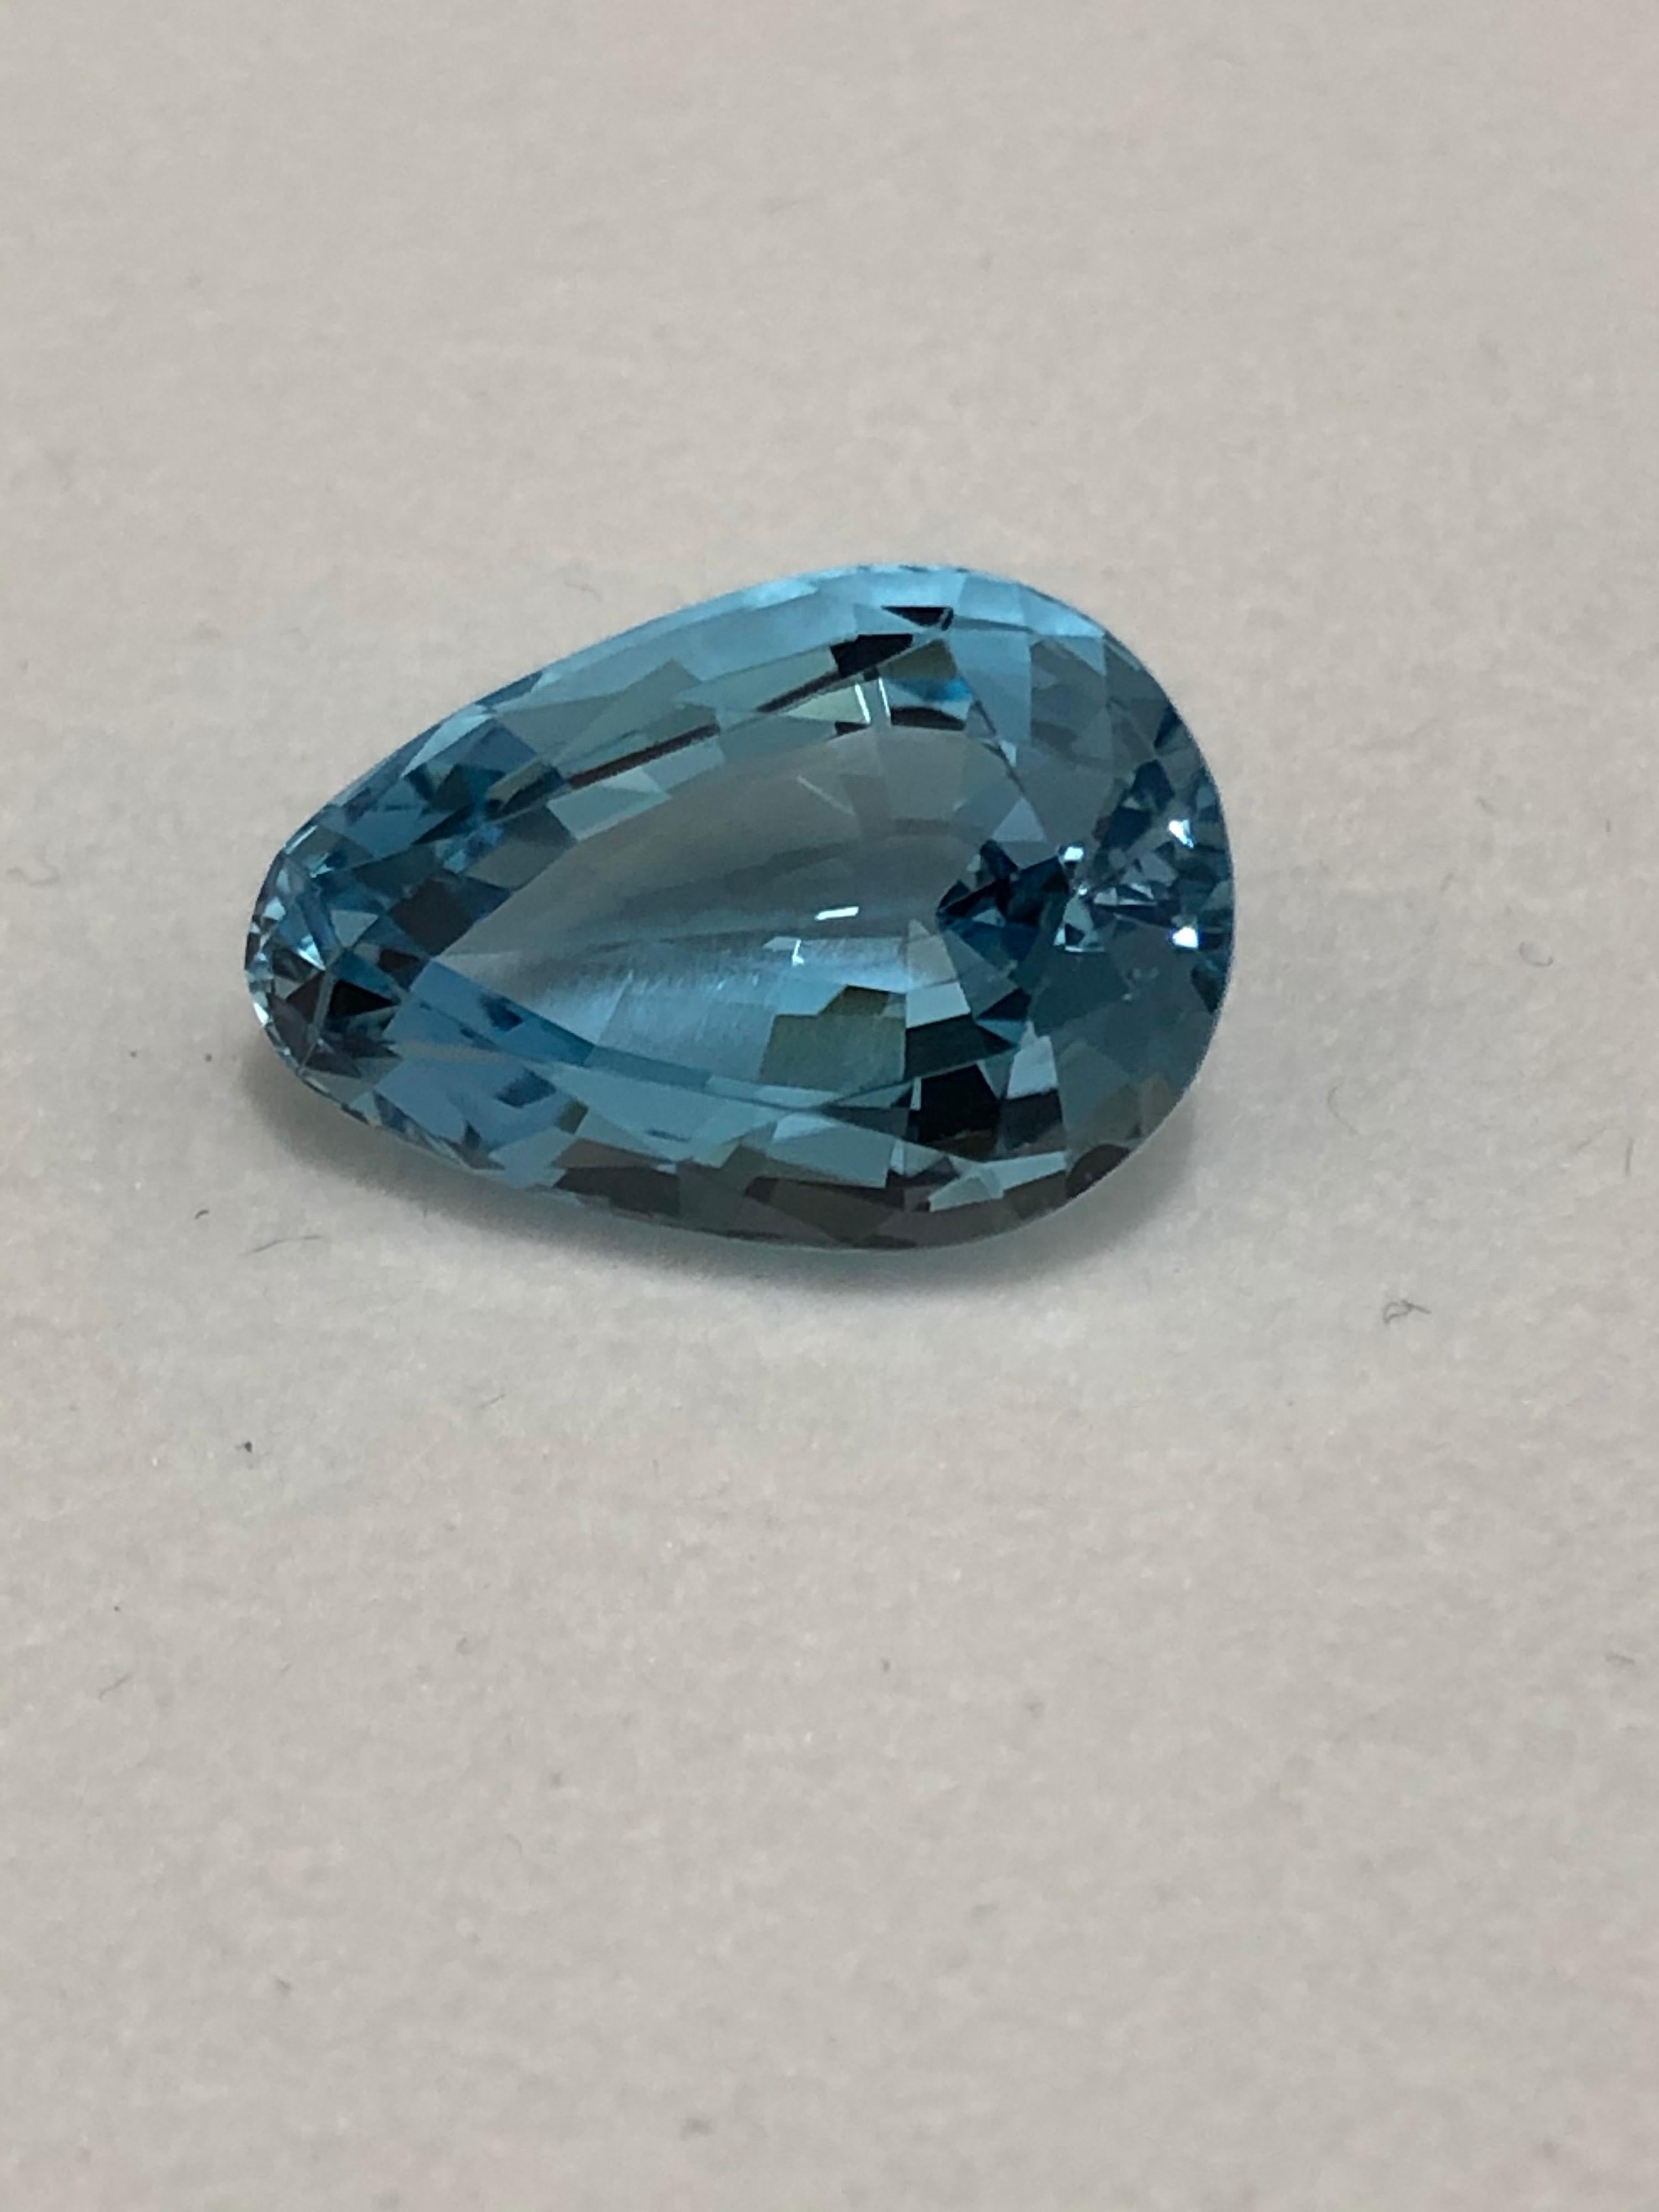 Contemporary Aquamarine Ring Necklace Gem 13.39 Carat Pear Shape Loose Gemstone